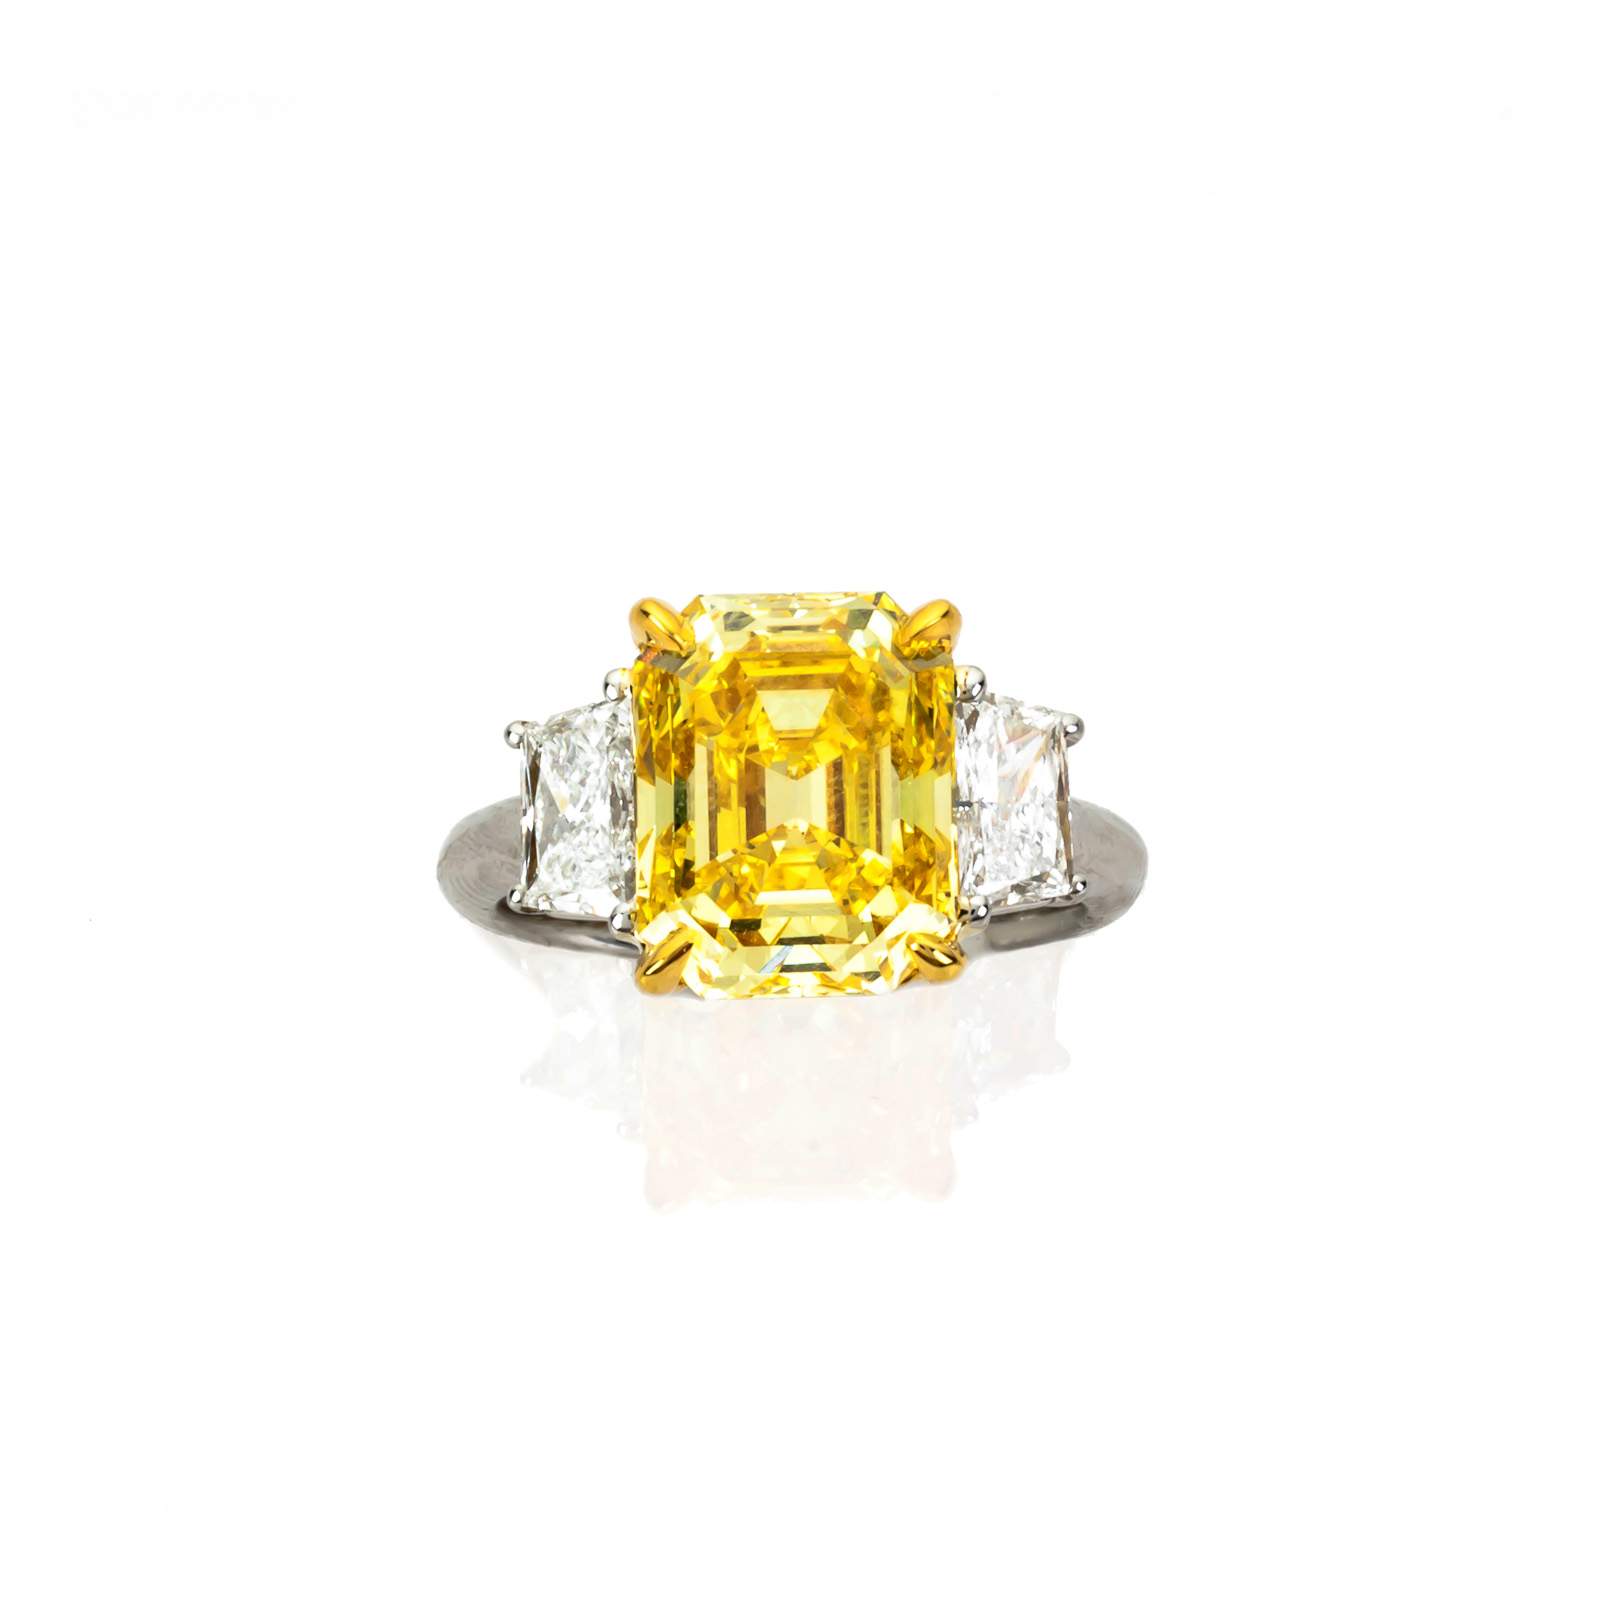 5 Carat Fancy Vivid Yellow Diamond & Diamond Ring | Cottone Auctions